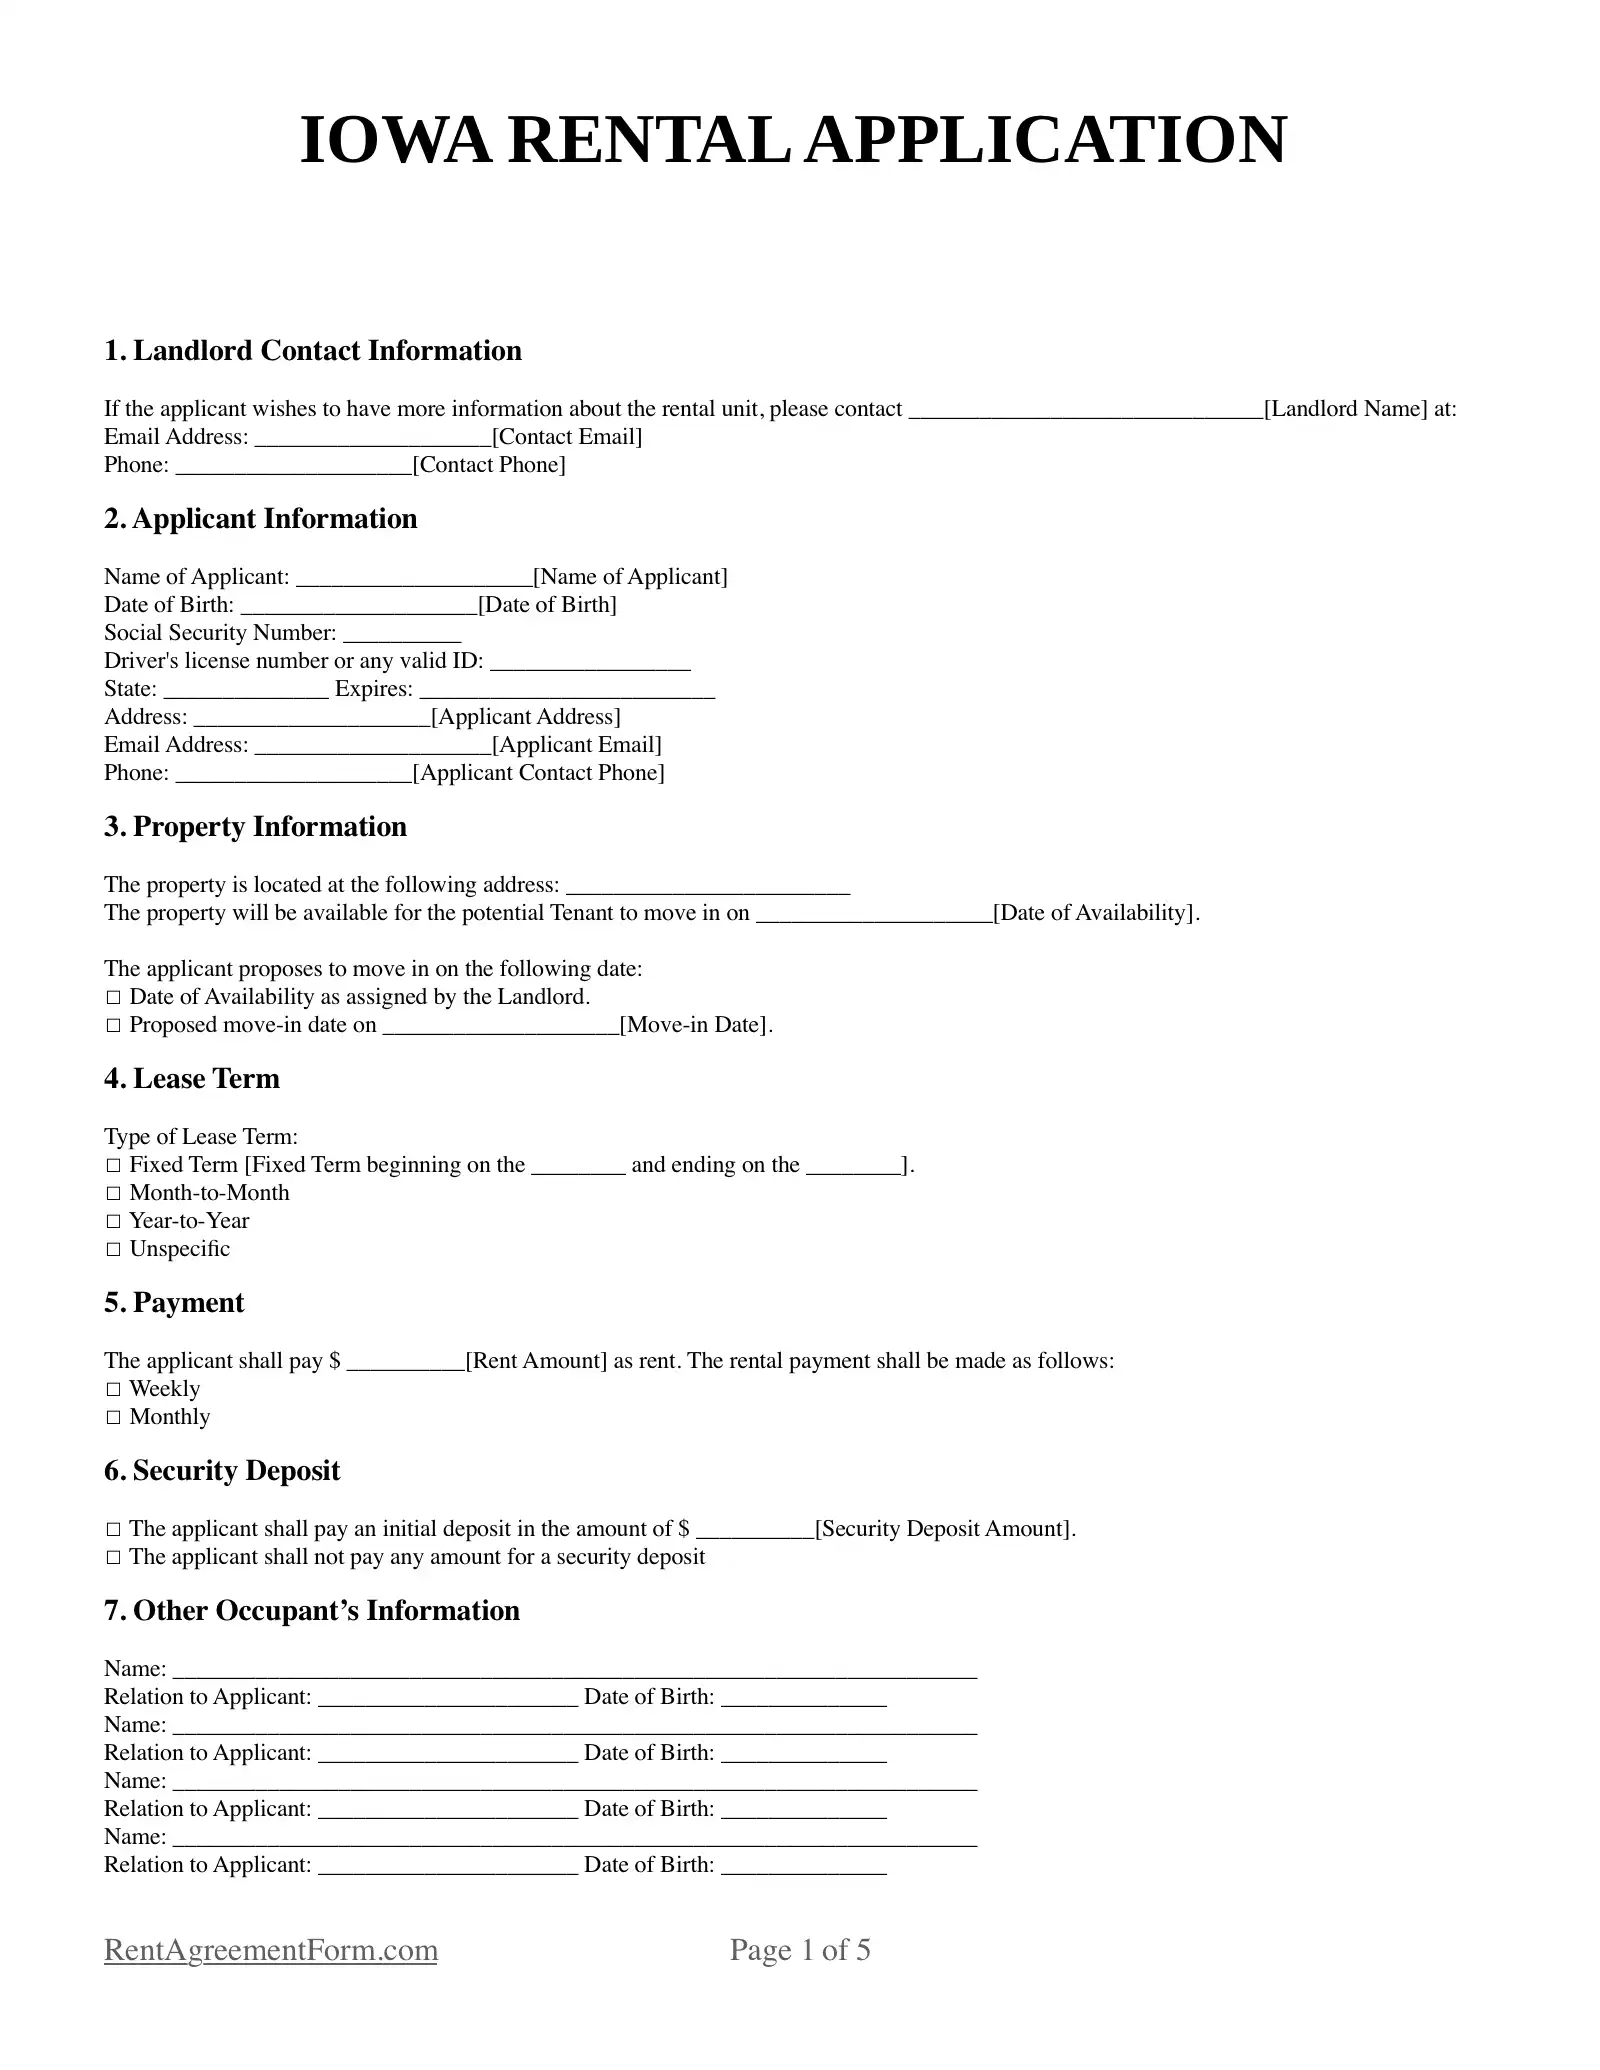 Iowa Rental Application Sample